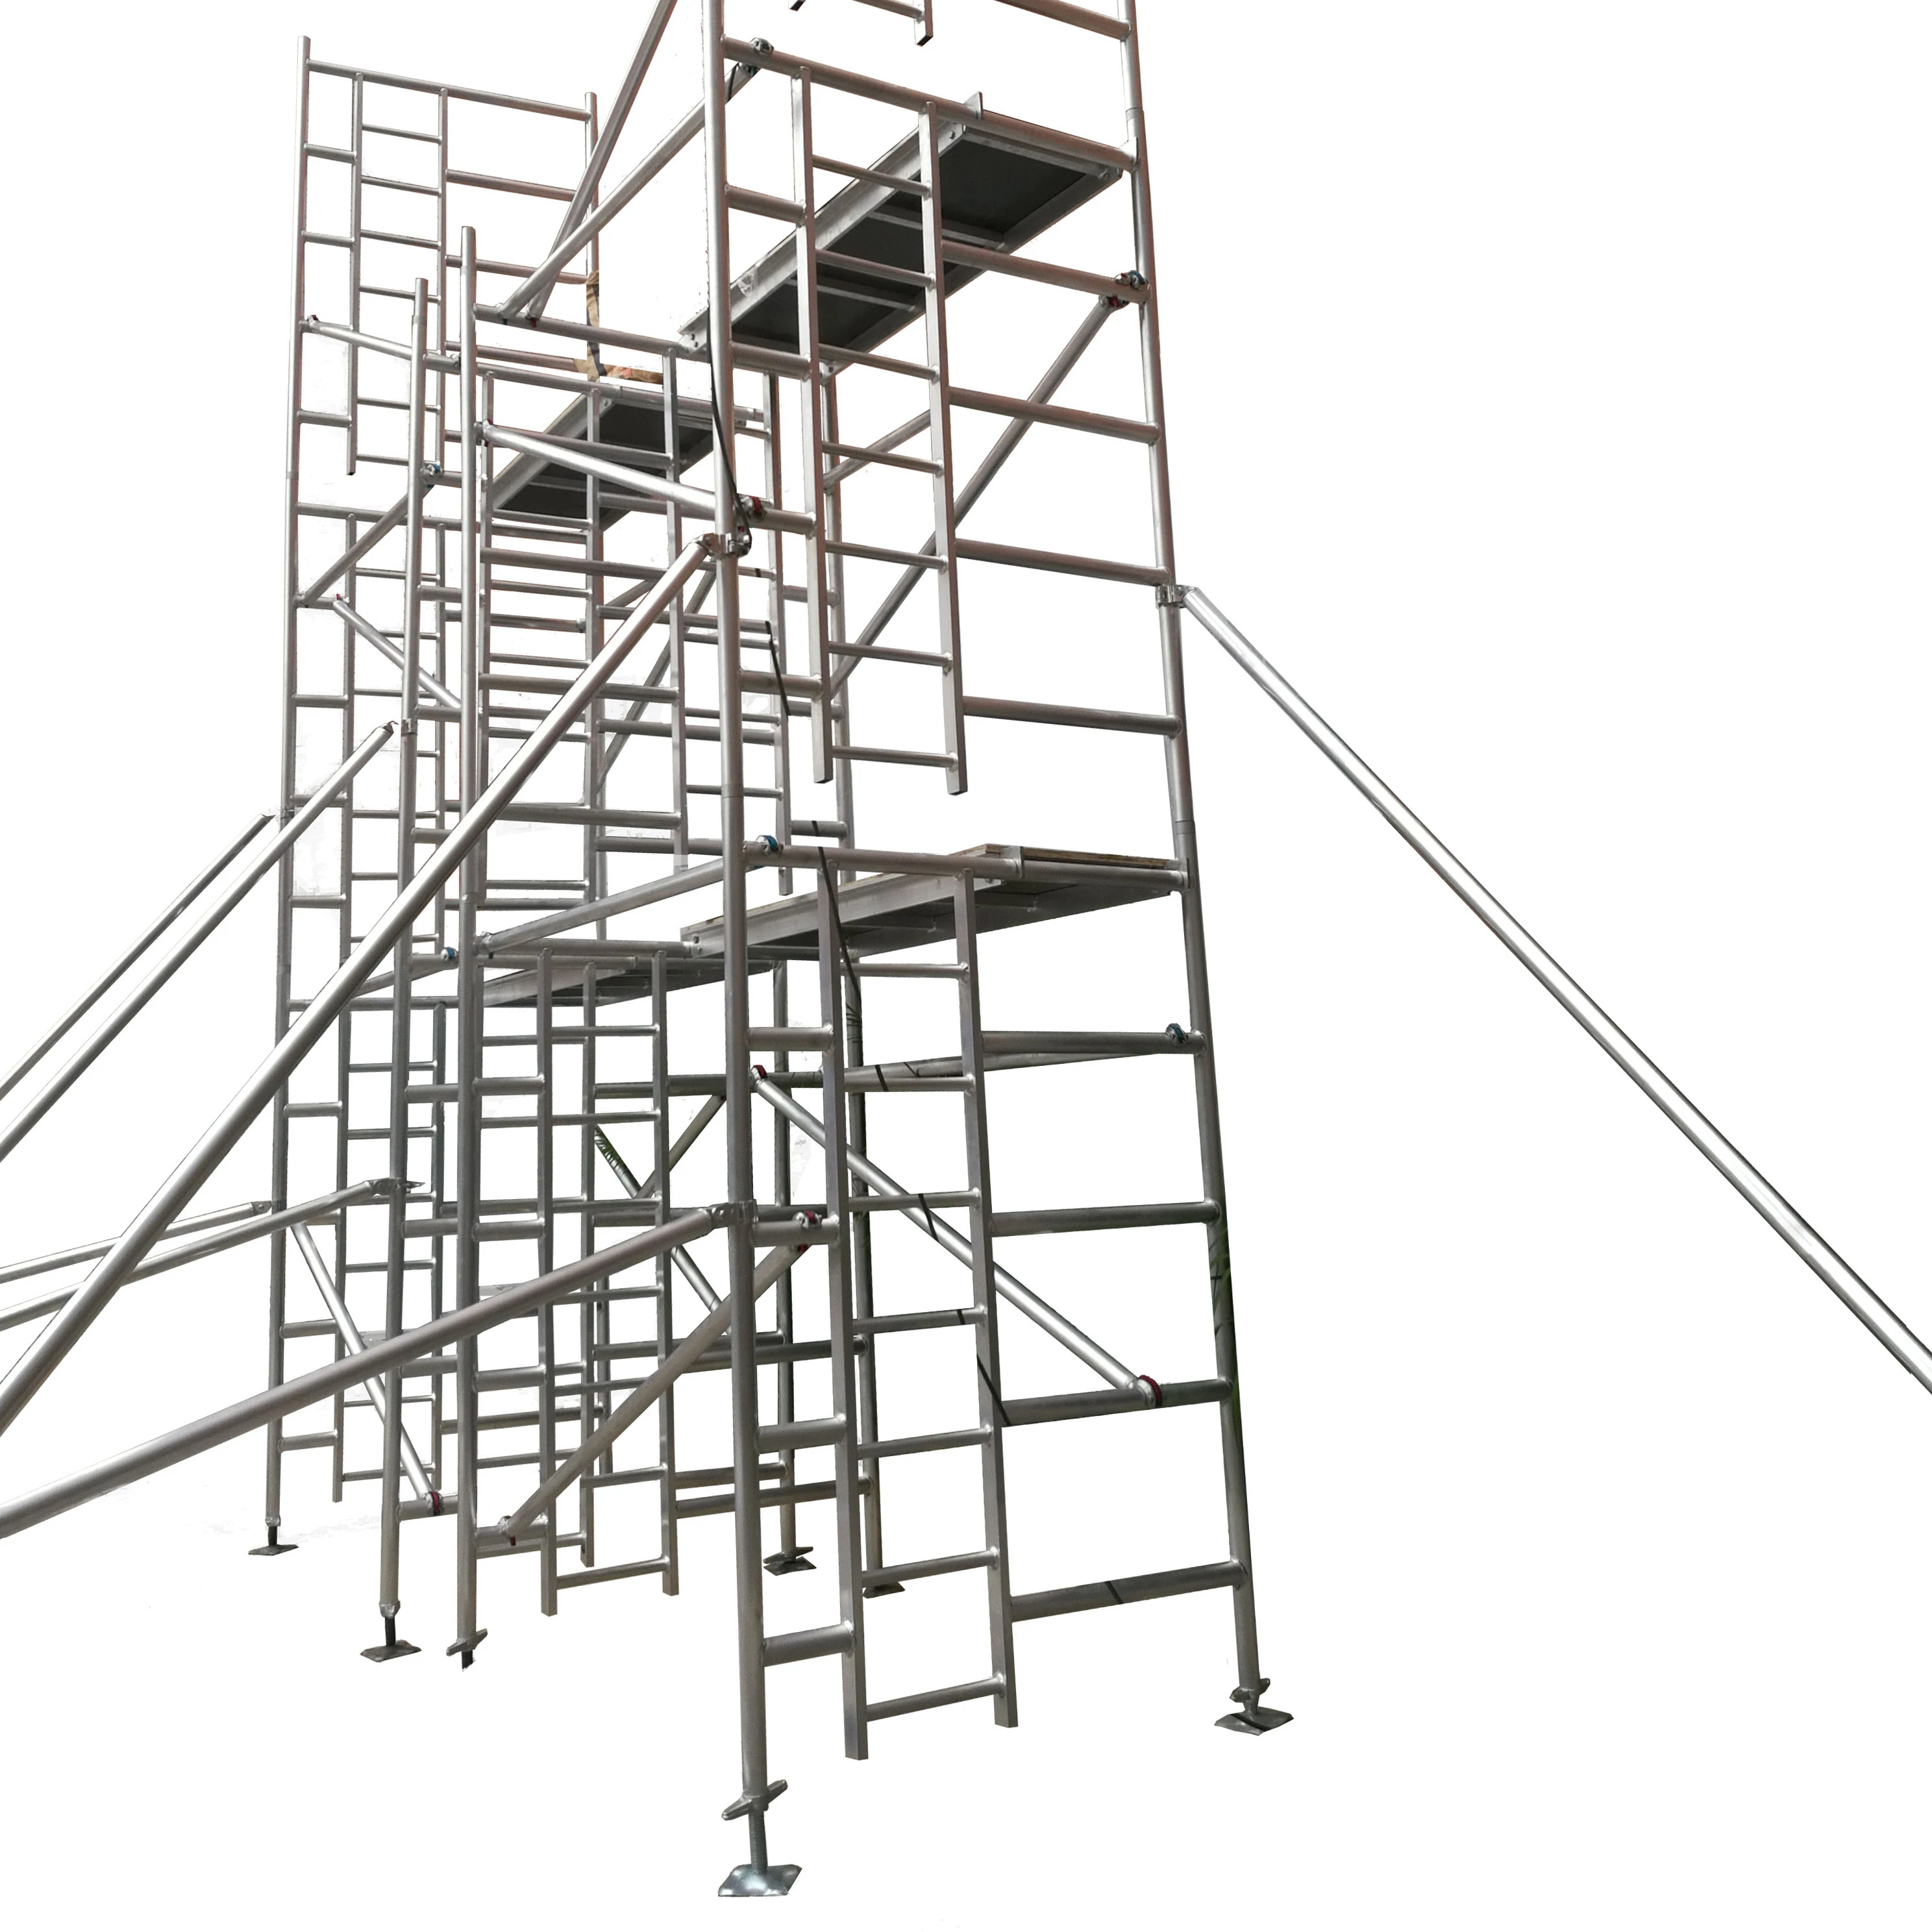 
Construction Aluminium Frame Scaffold Movable Scaffolding for sale  (60736995659)